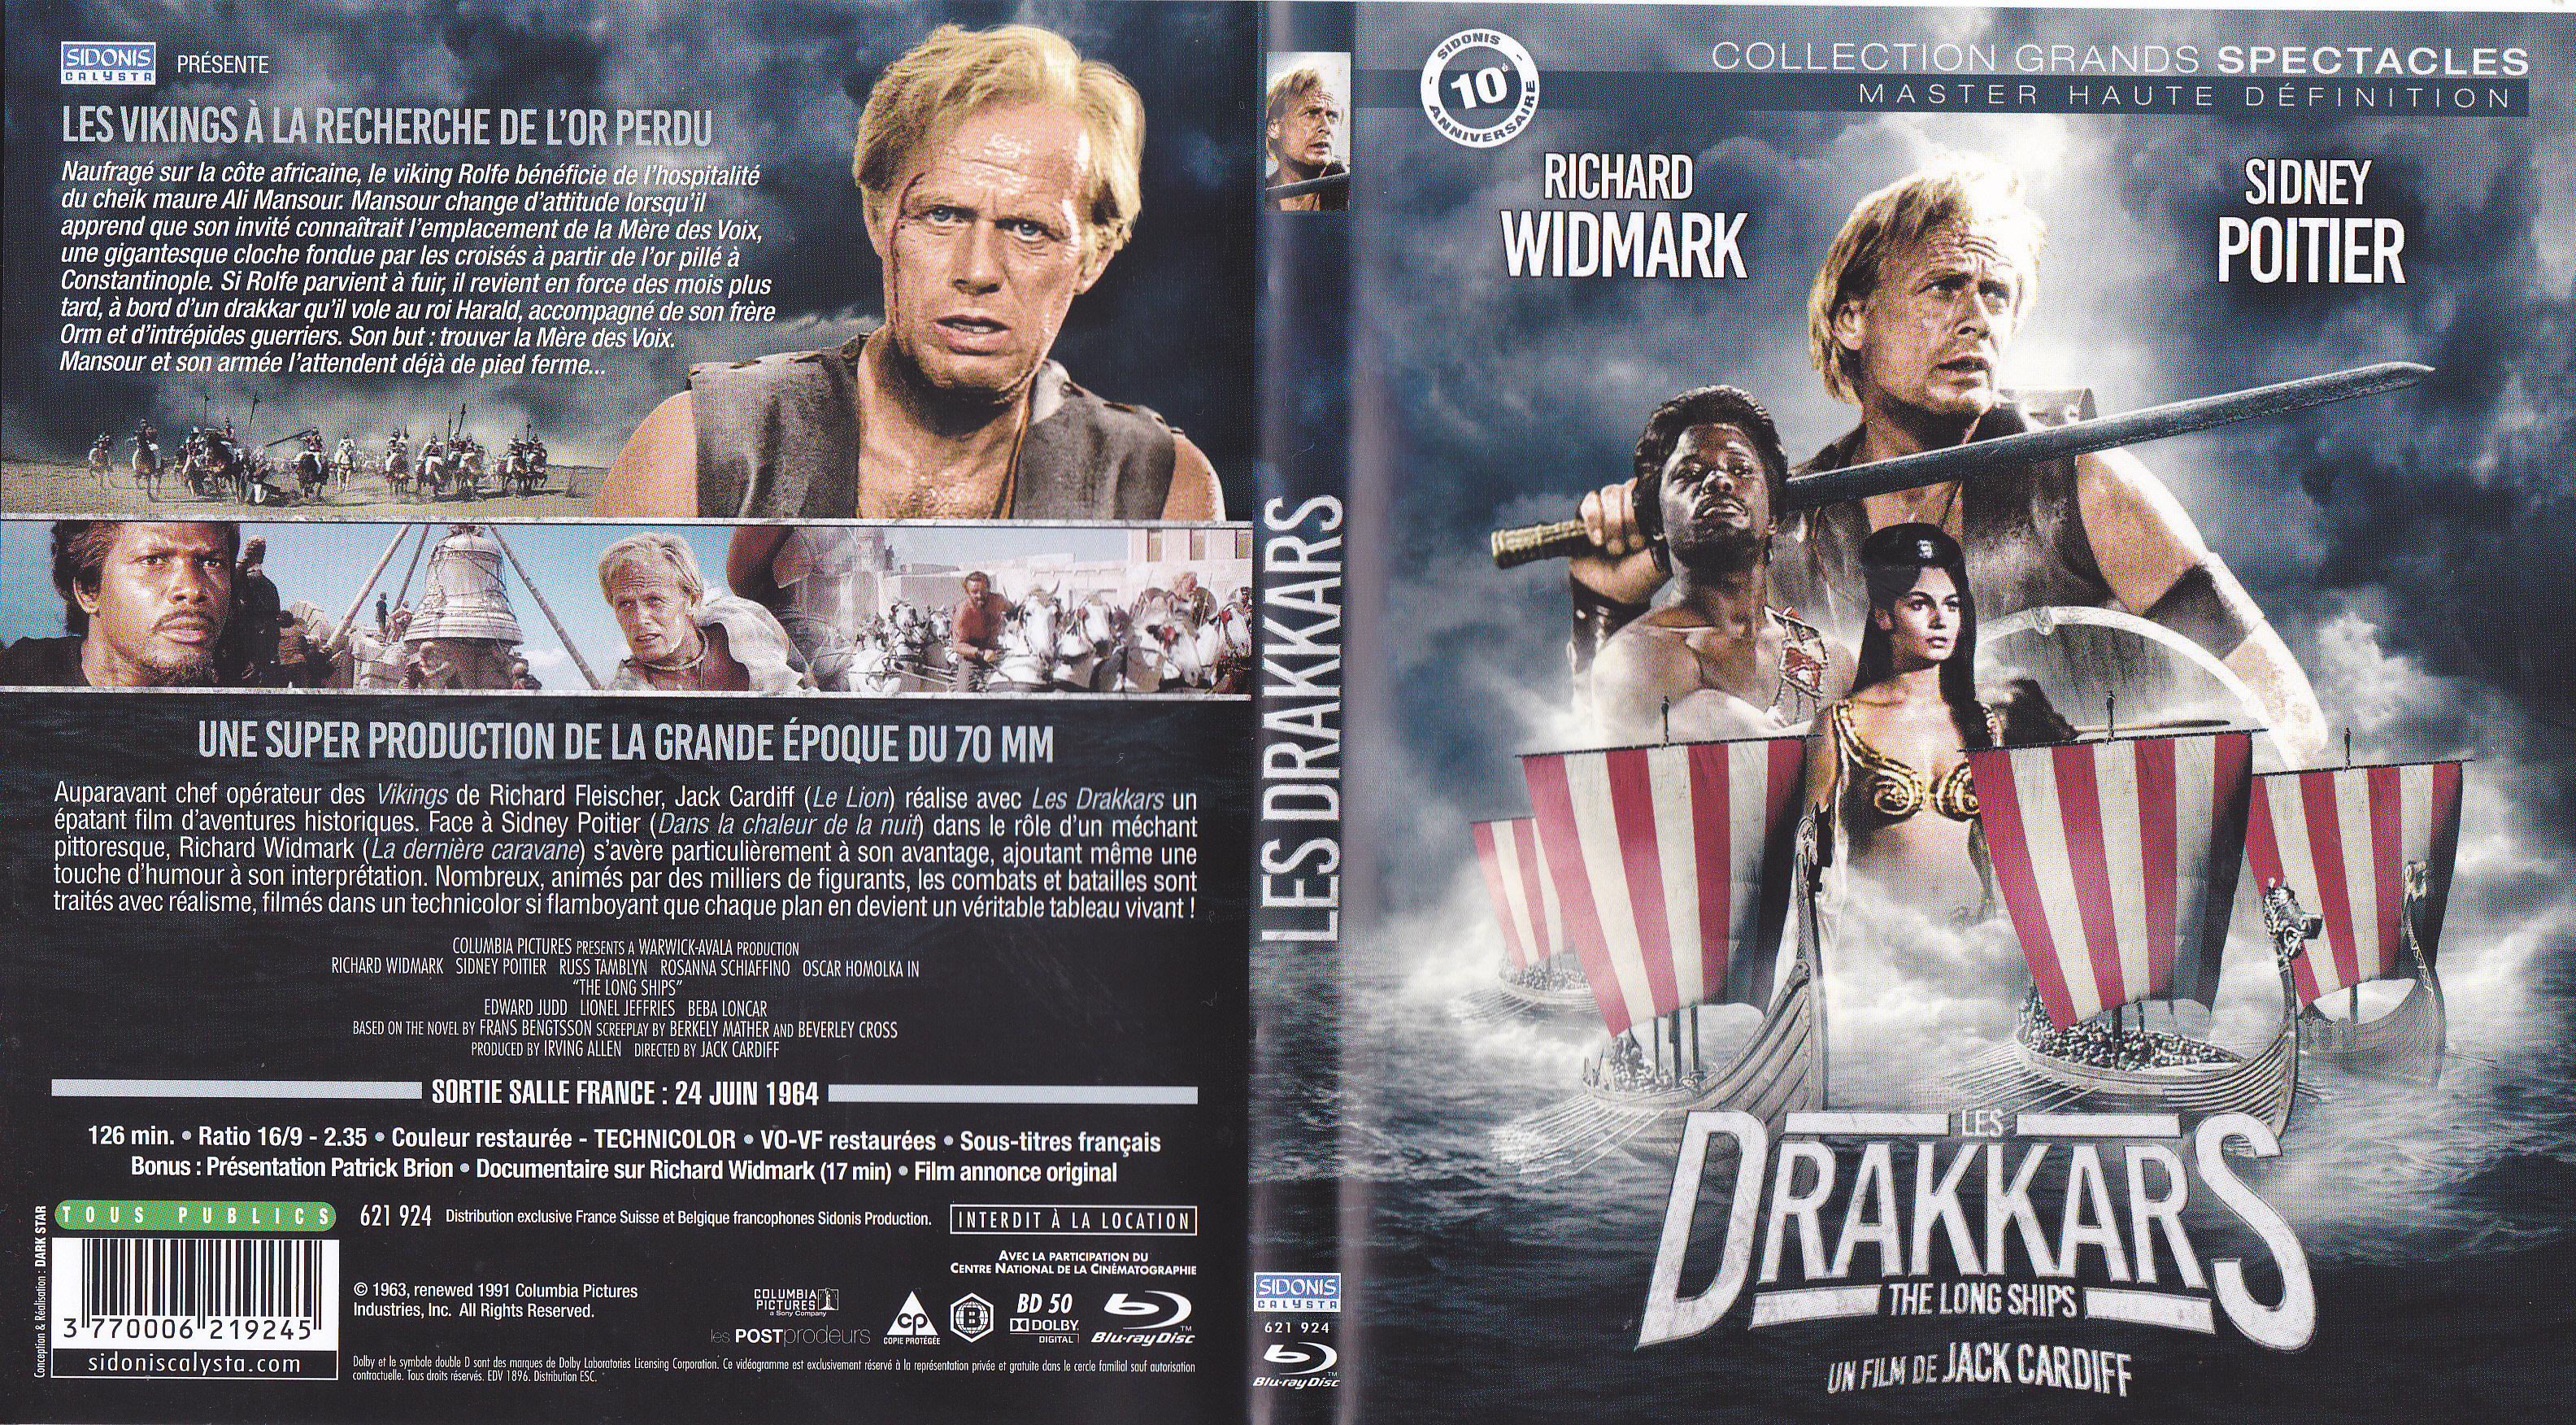 Jaquette DVD Les Drakkars (BLU-RAY)